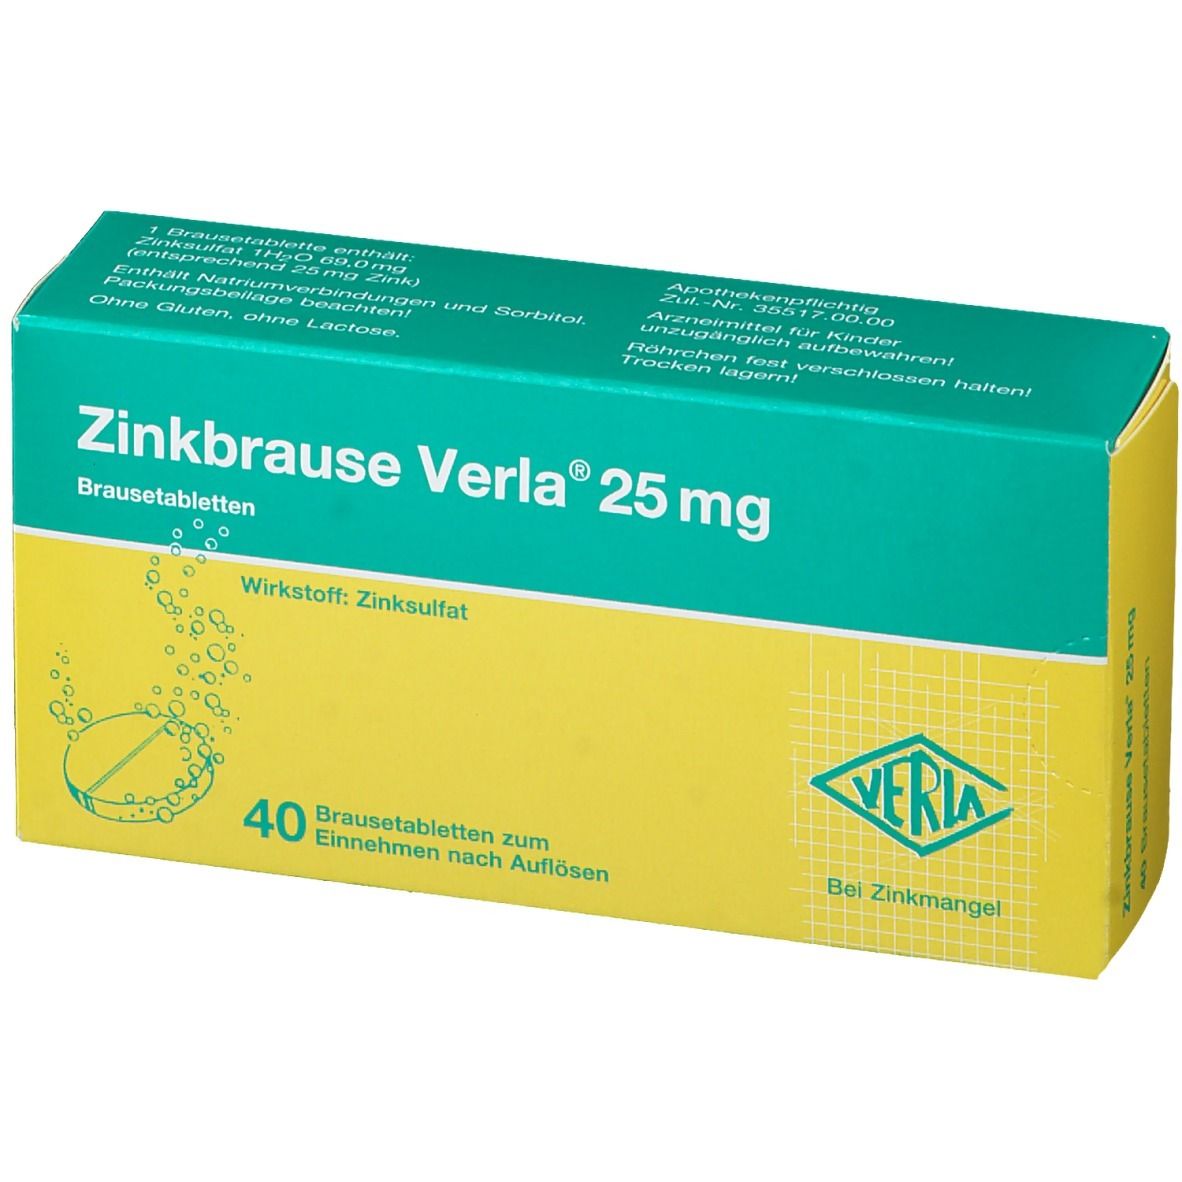 Zinkbrause Verla® 25 mg Brausetabletten